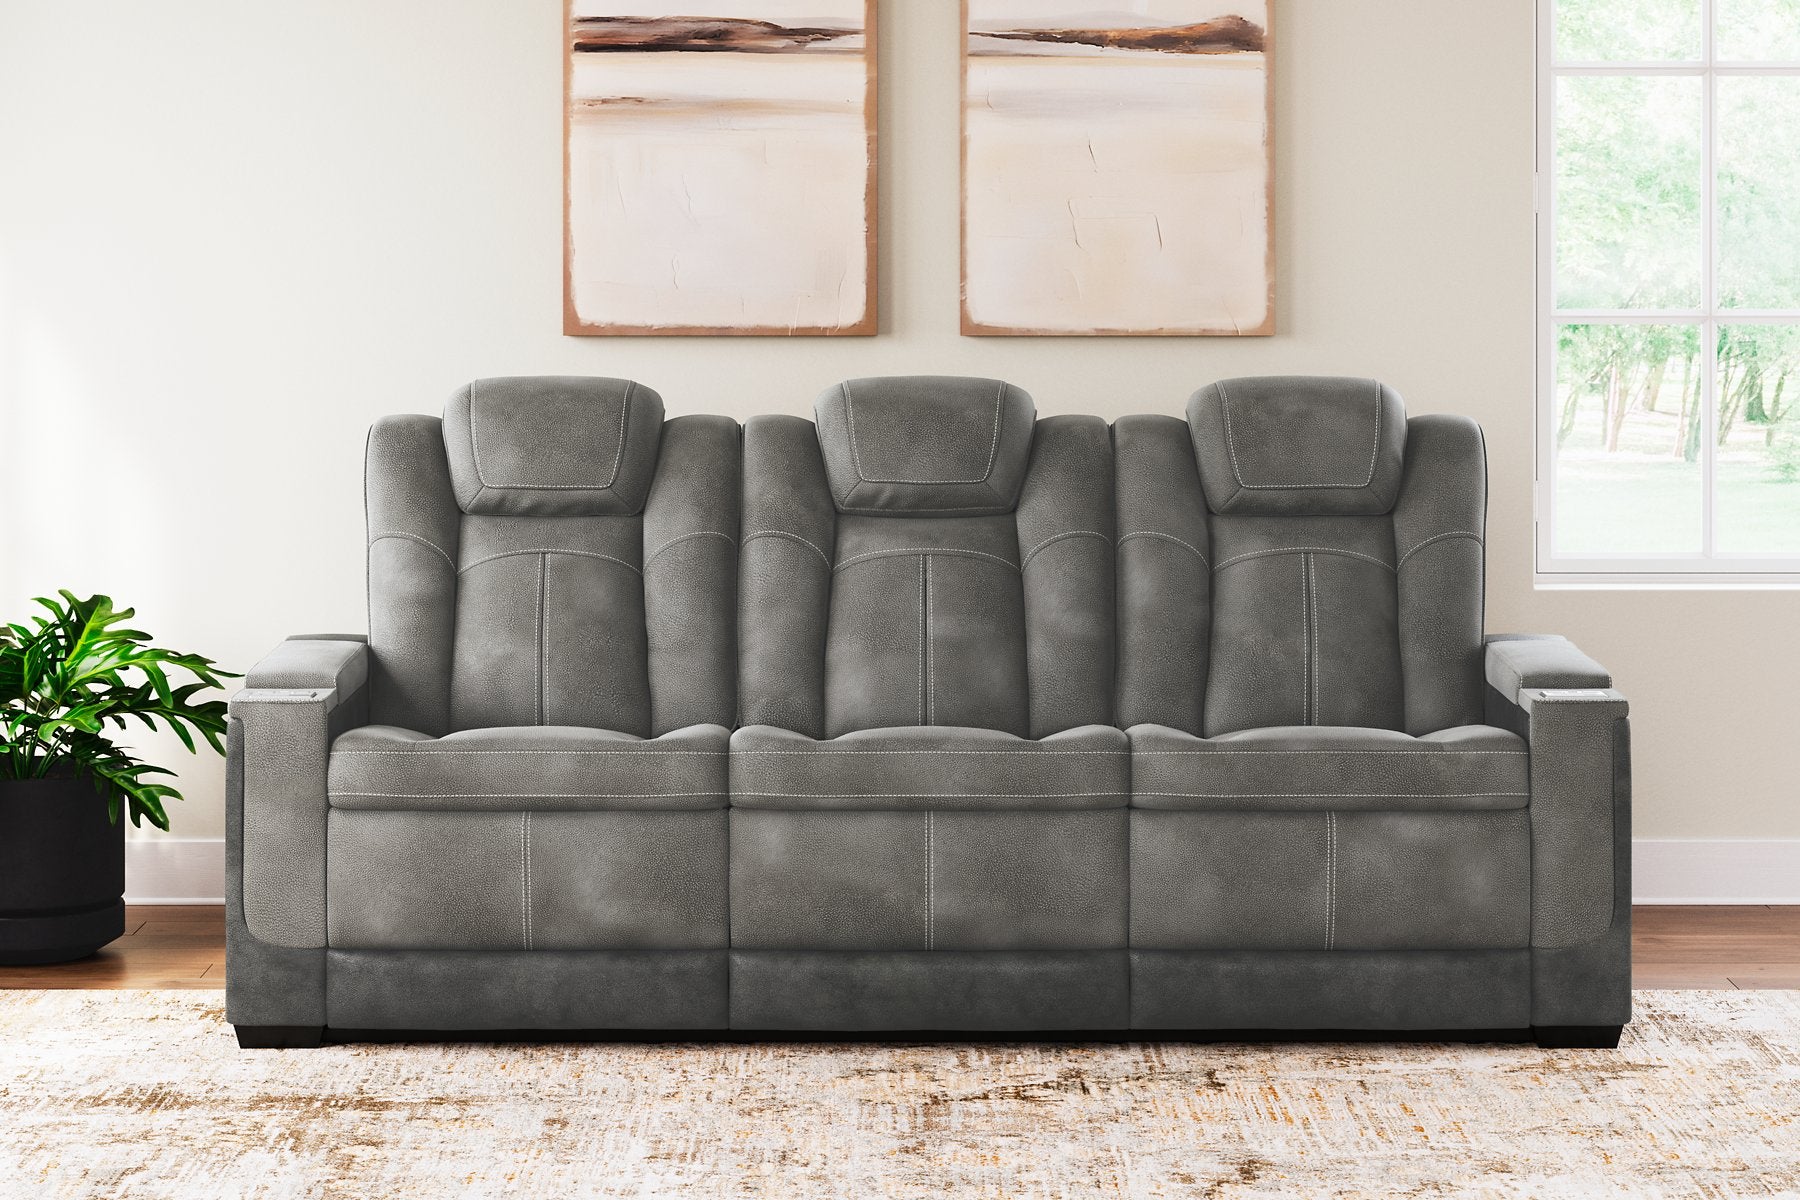 Next-Gen DuraPella Living Room Set - Half Price Furniture